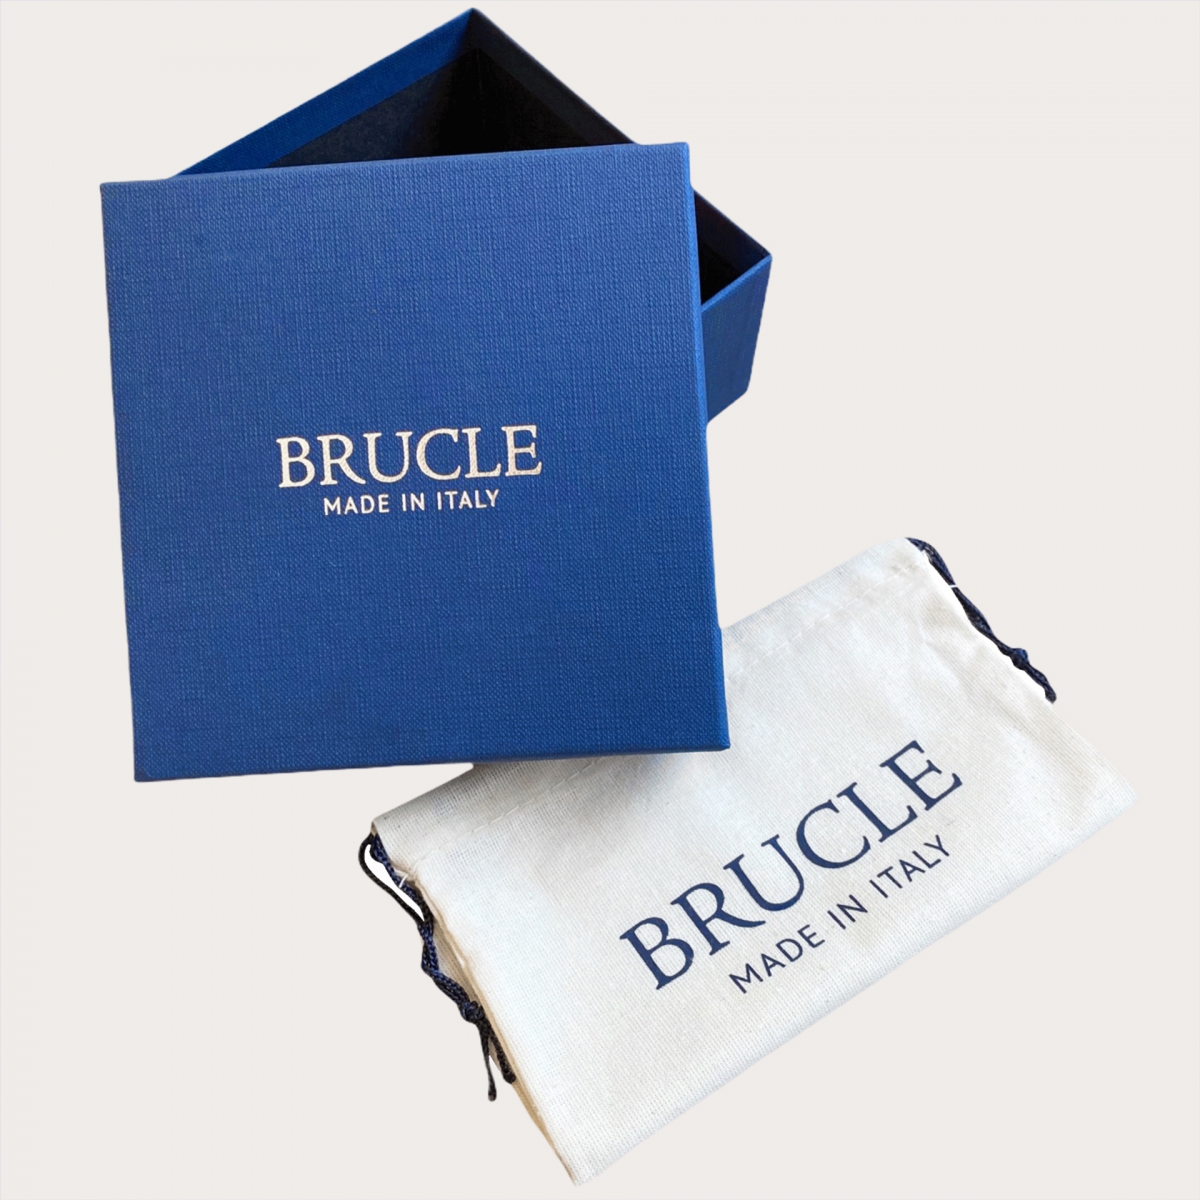 BRUCLE Cintura elastica intrecciata multicolor blu nichel free